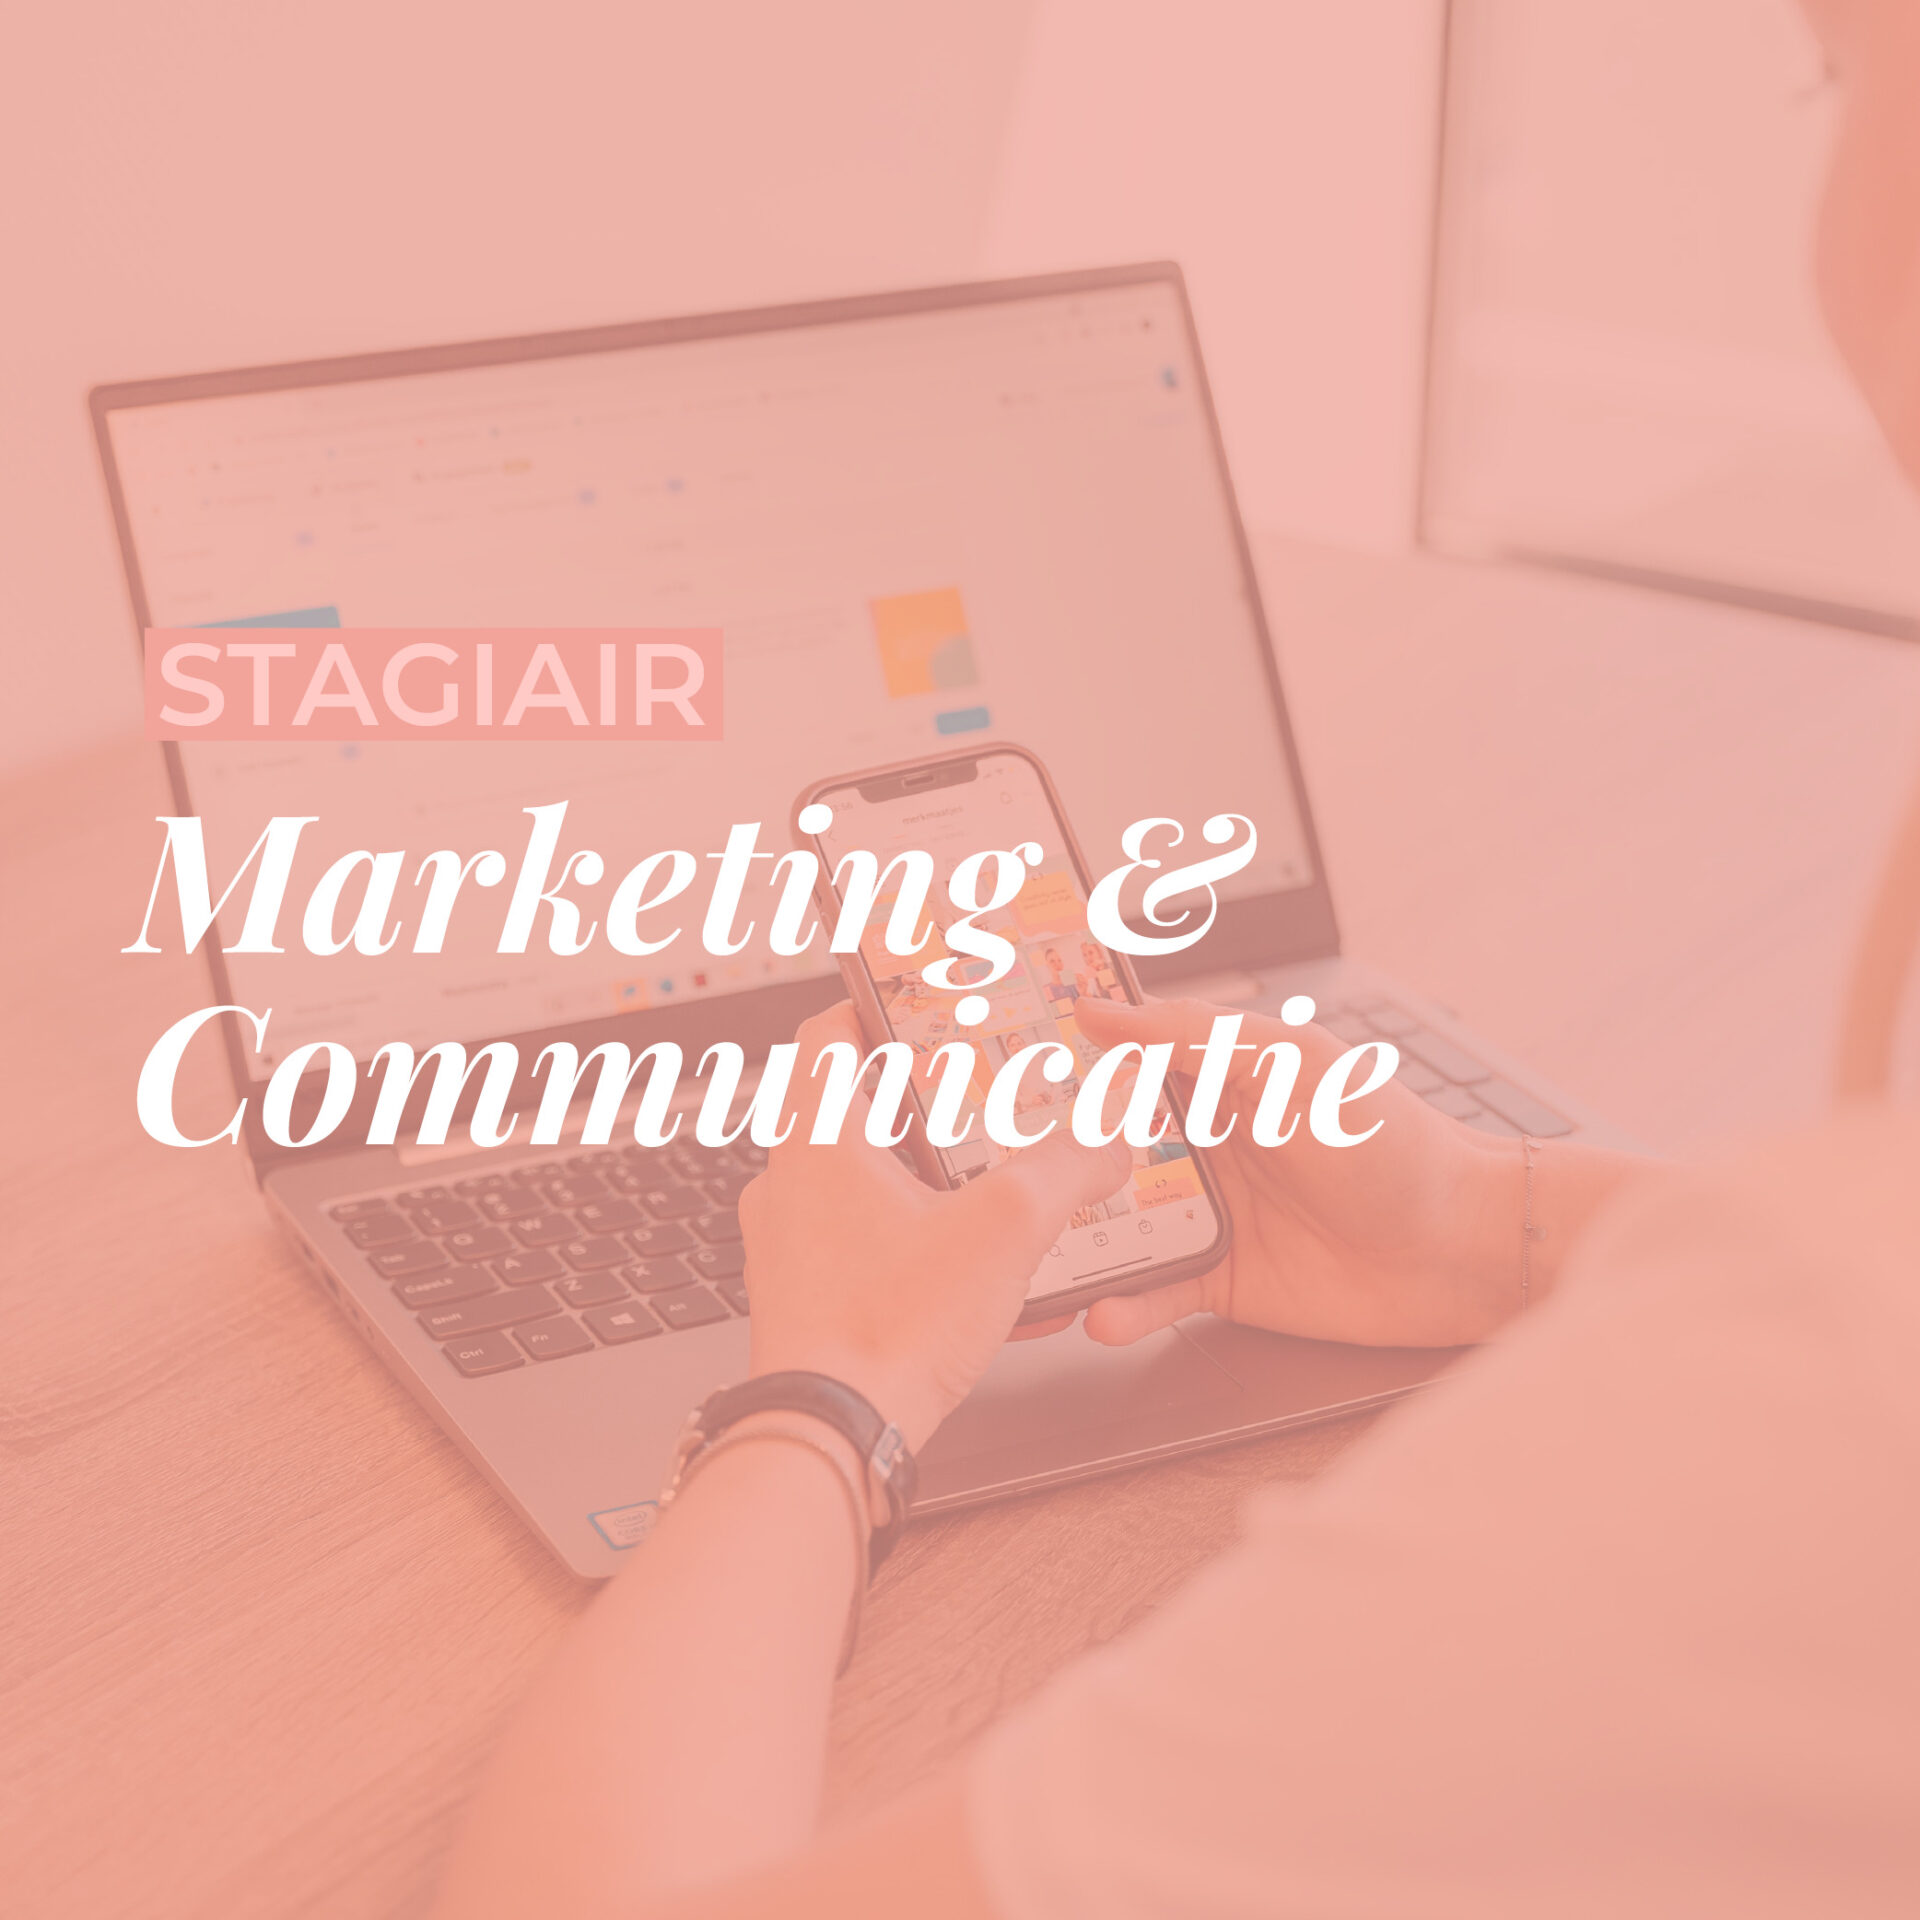 Stagiair- Marketing & Communicatie